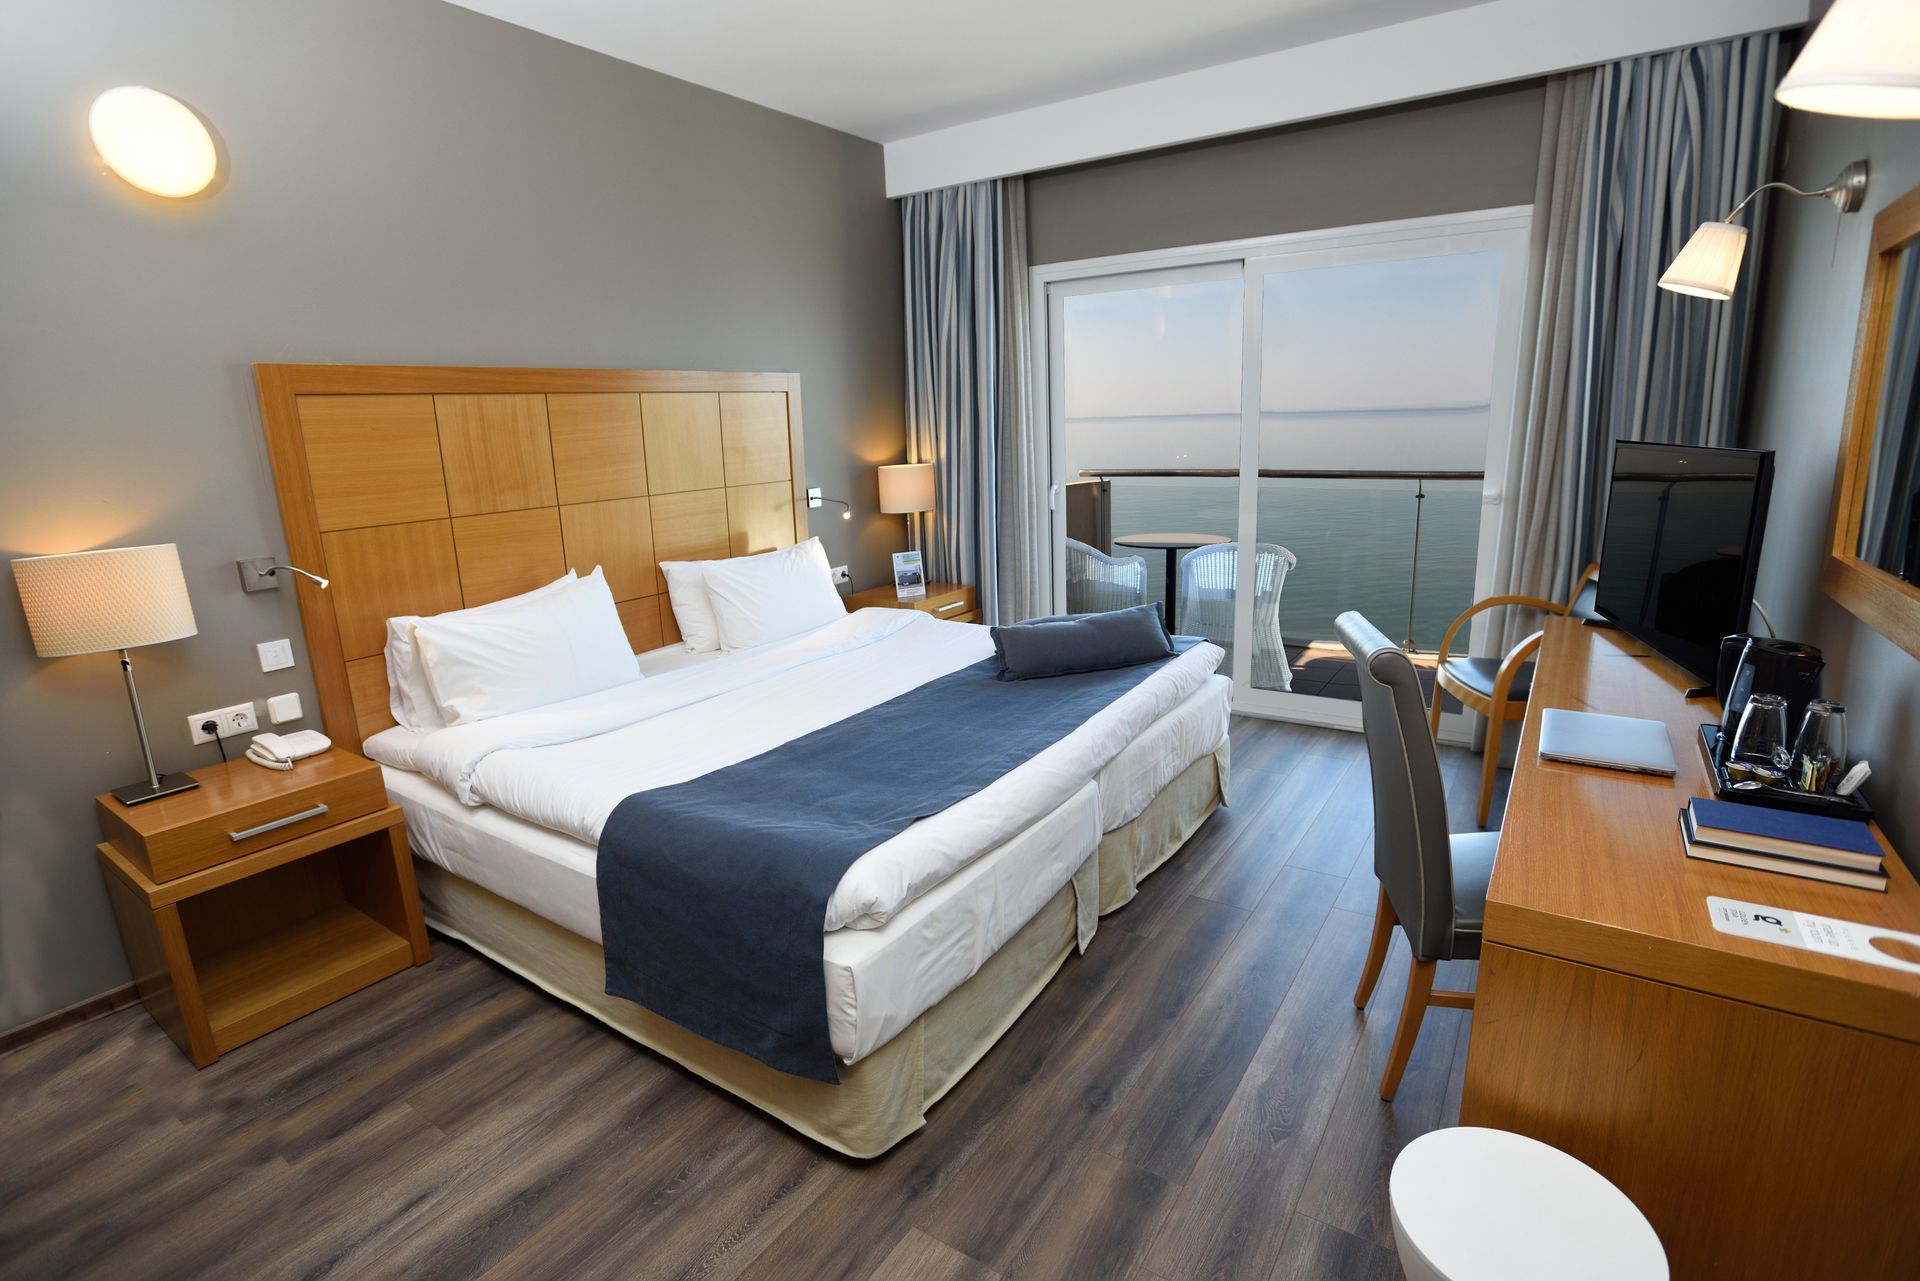 4* Golden Star City Resort - Θεσσαλονίκη ✦ -25% ✦ 3